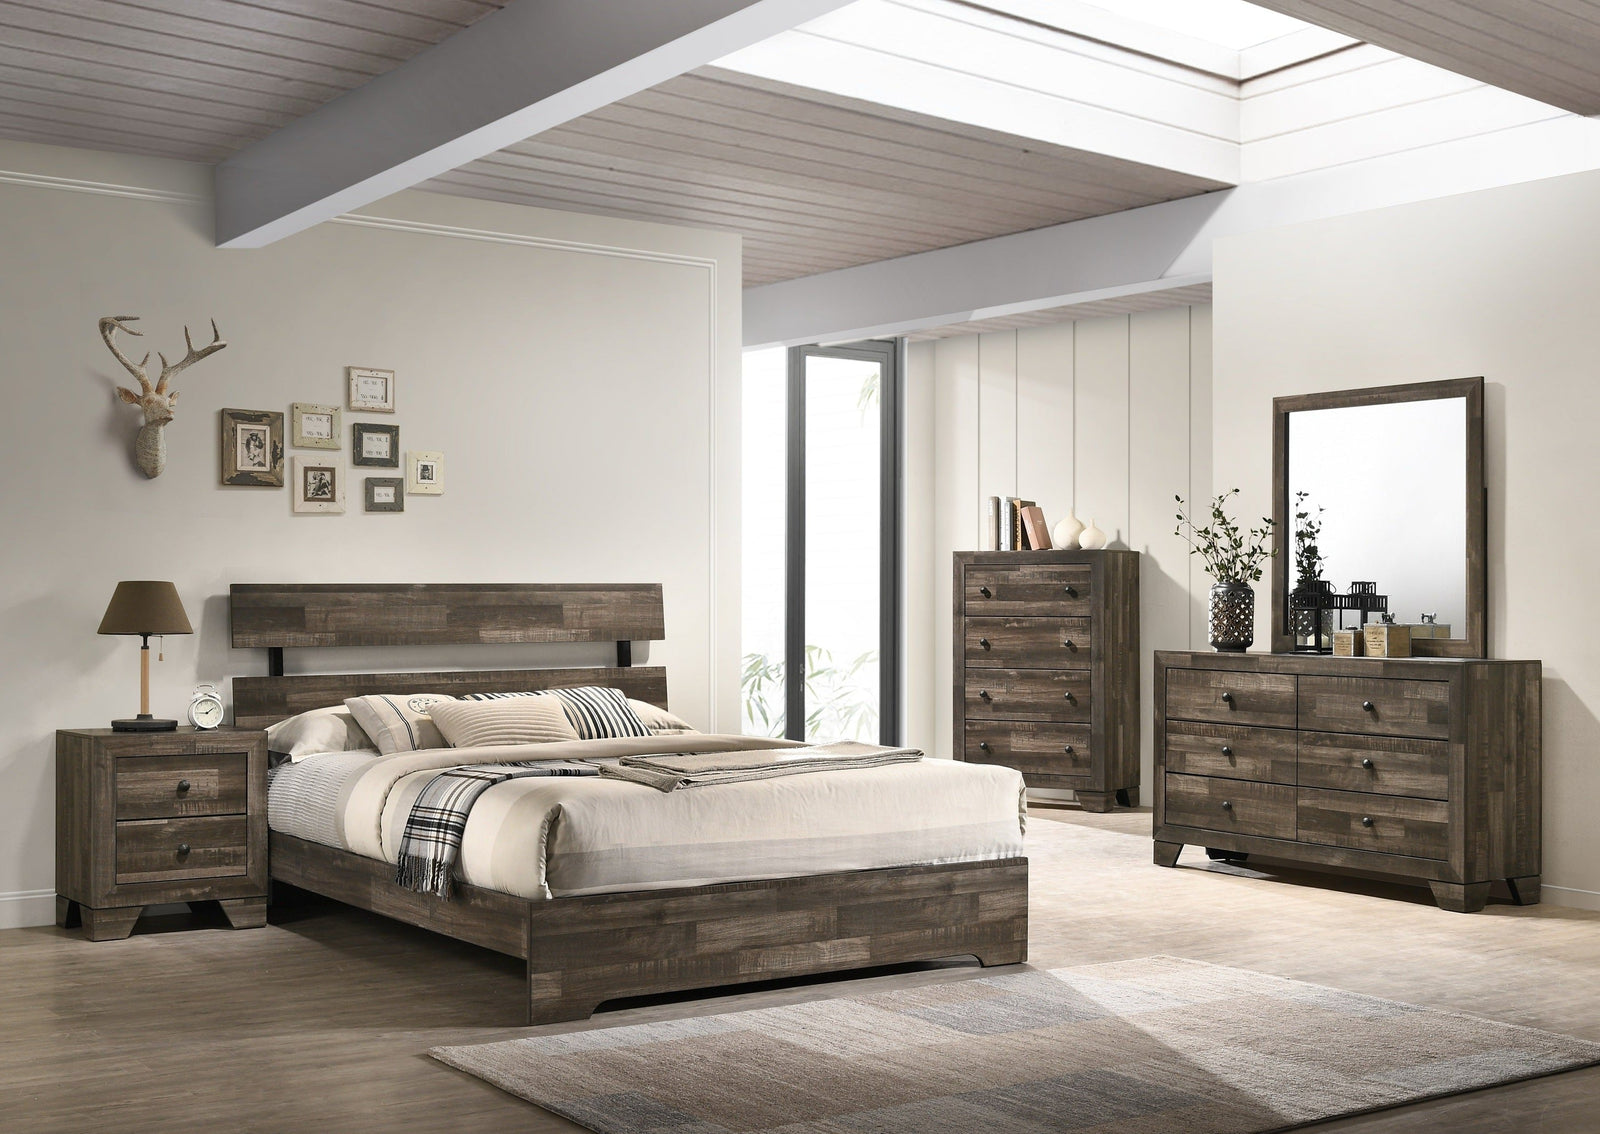 Atticus Brown Finish Modern And Rustic Wood Platform Bedroom Set